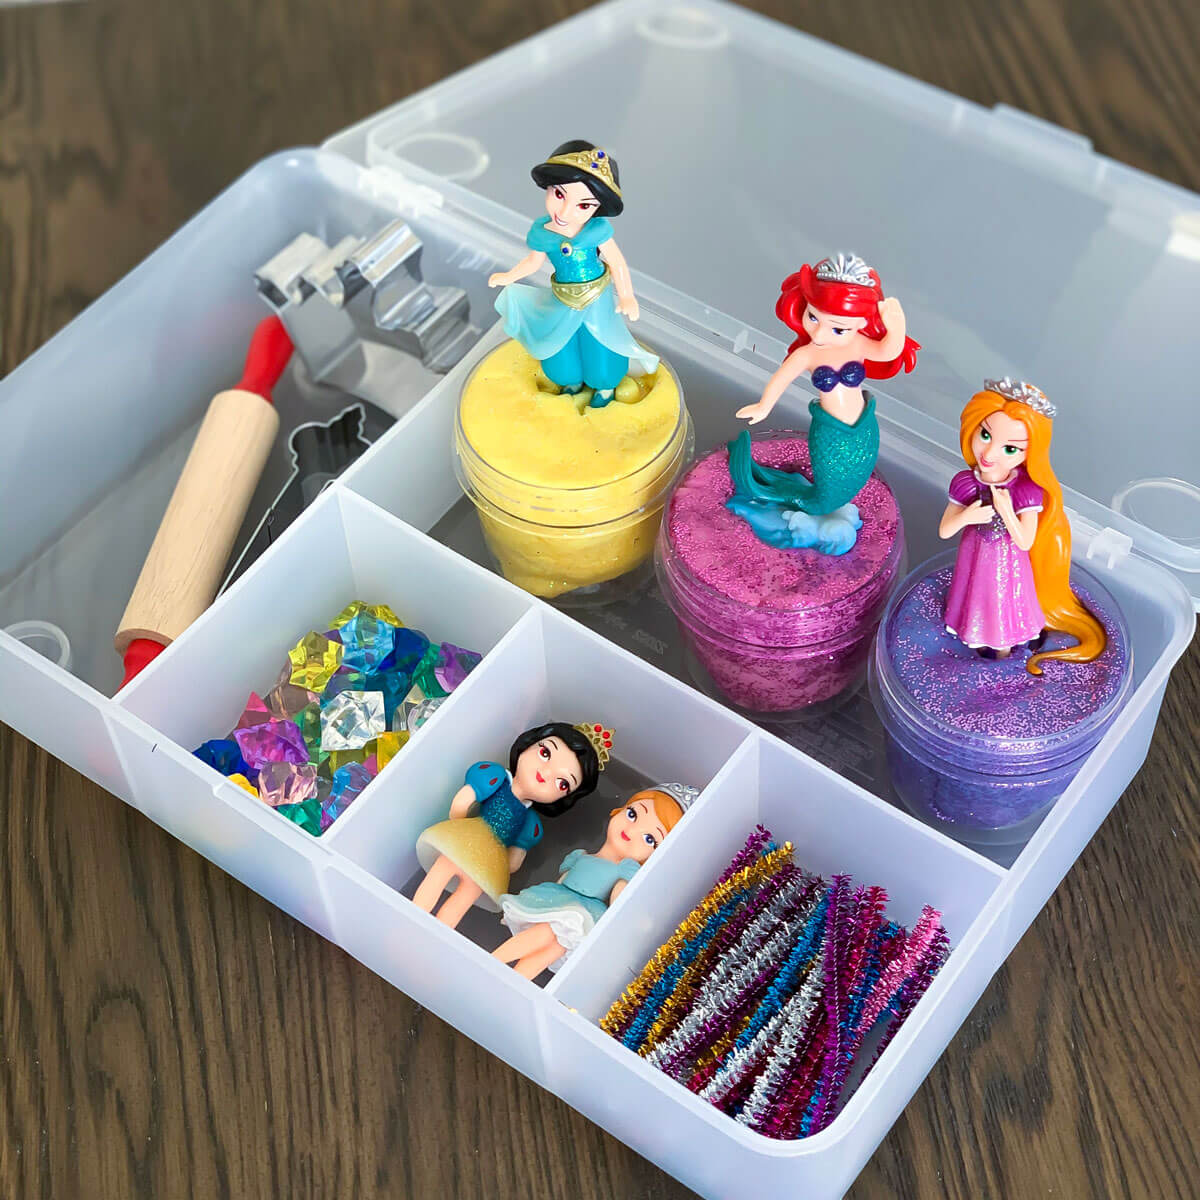 Play Dough Gift - Easily Assemble a Fun Princess Kit - 7 Days of Play